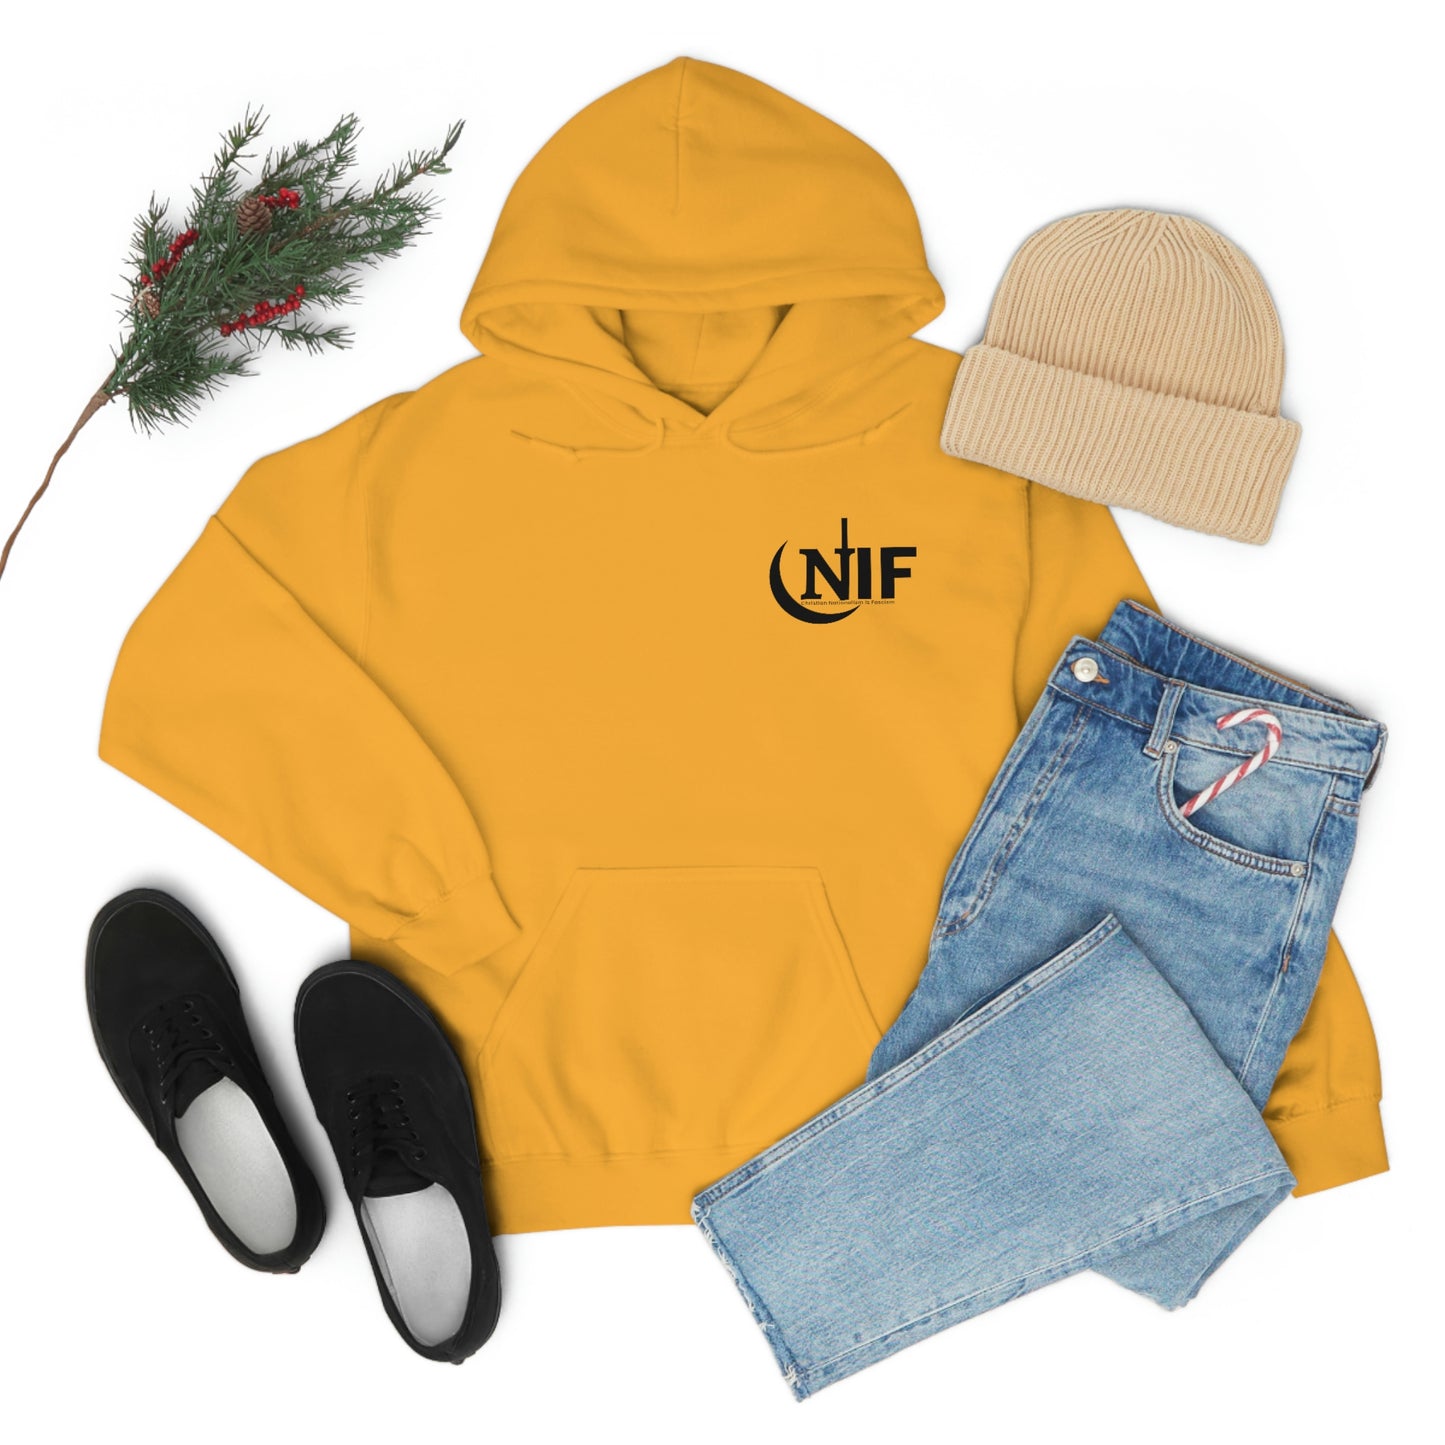 CNIF Christian Nationalism is Fascism (dark font) Unisex Heavy Blend™ Hooded Sweatshirt